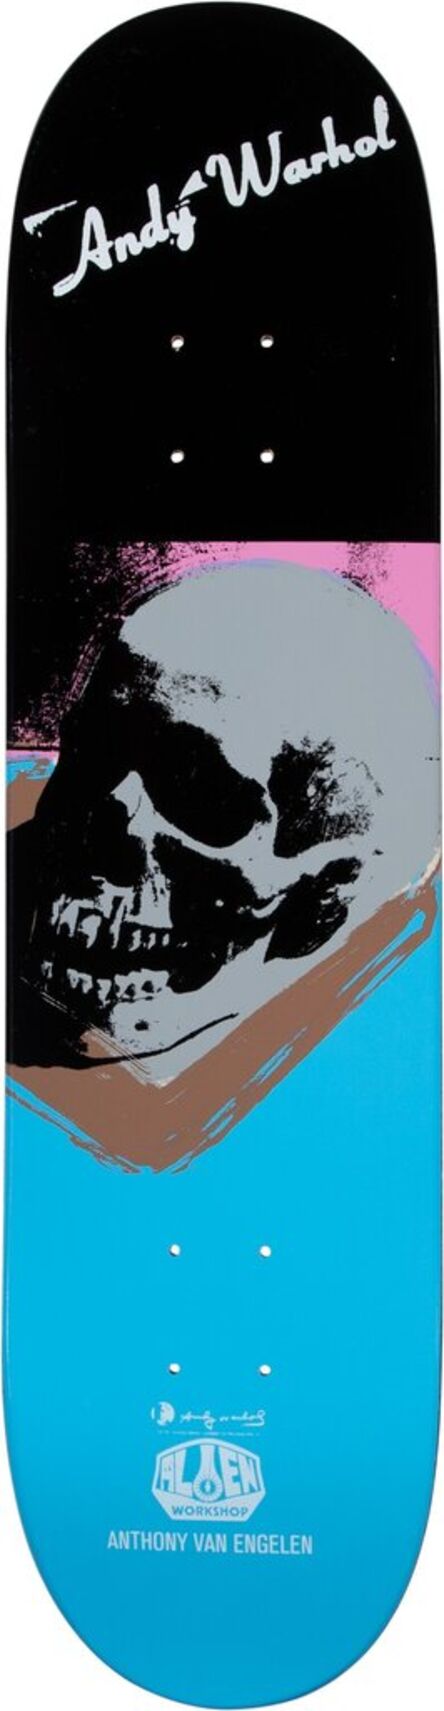 Andy Warhol, ‘Skull’, 2010